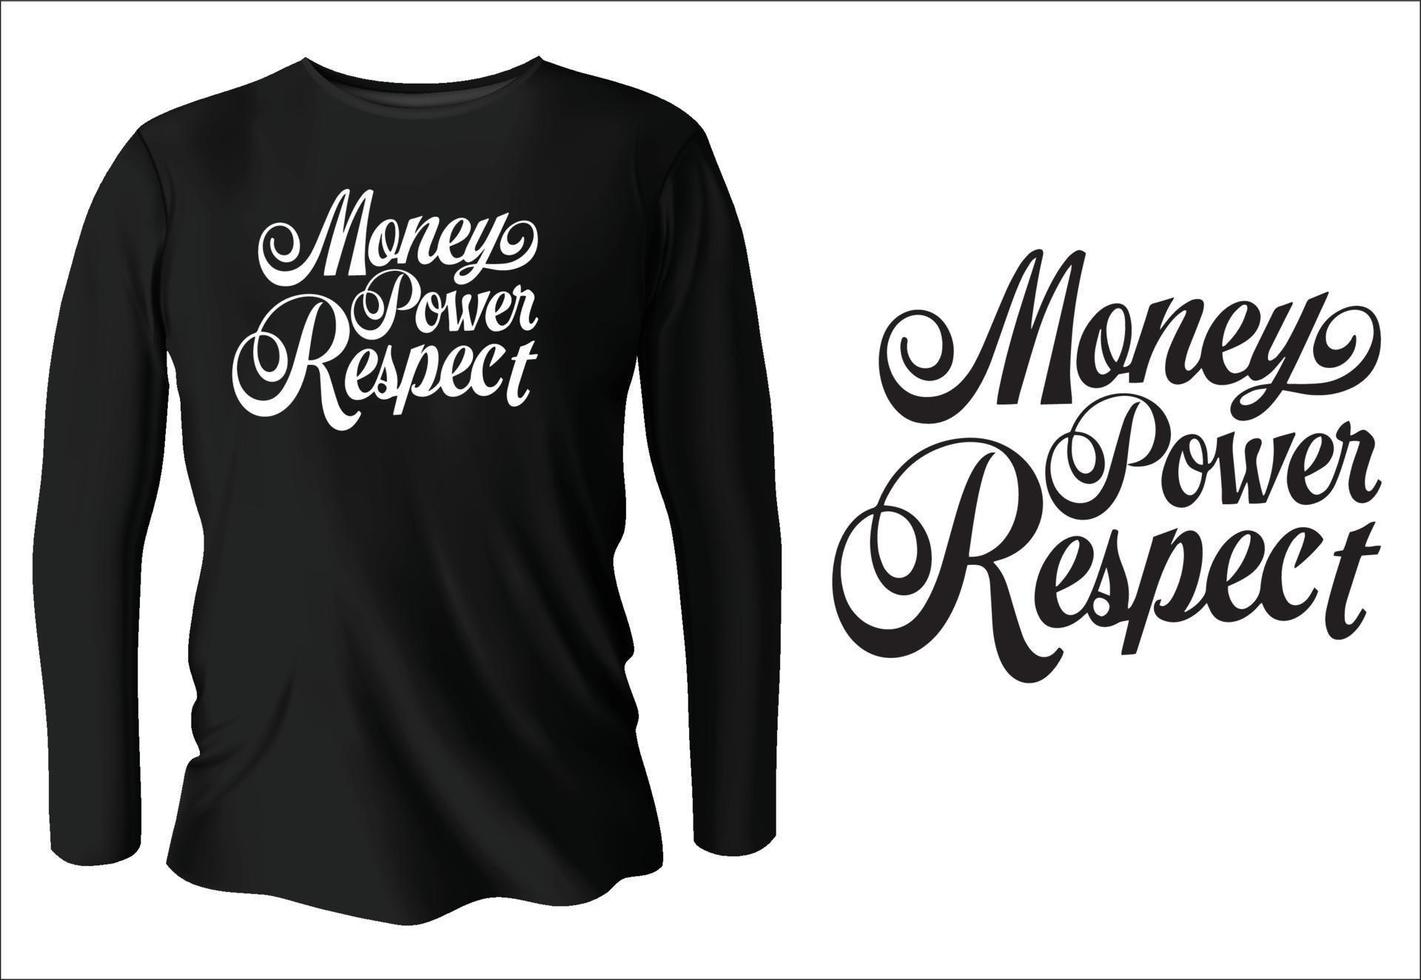 money power respect t-shirt design with vector